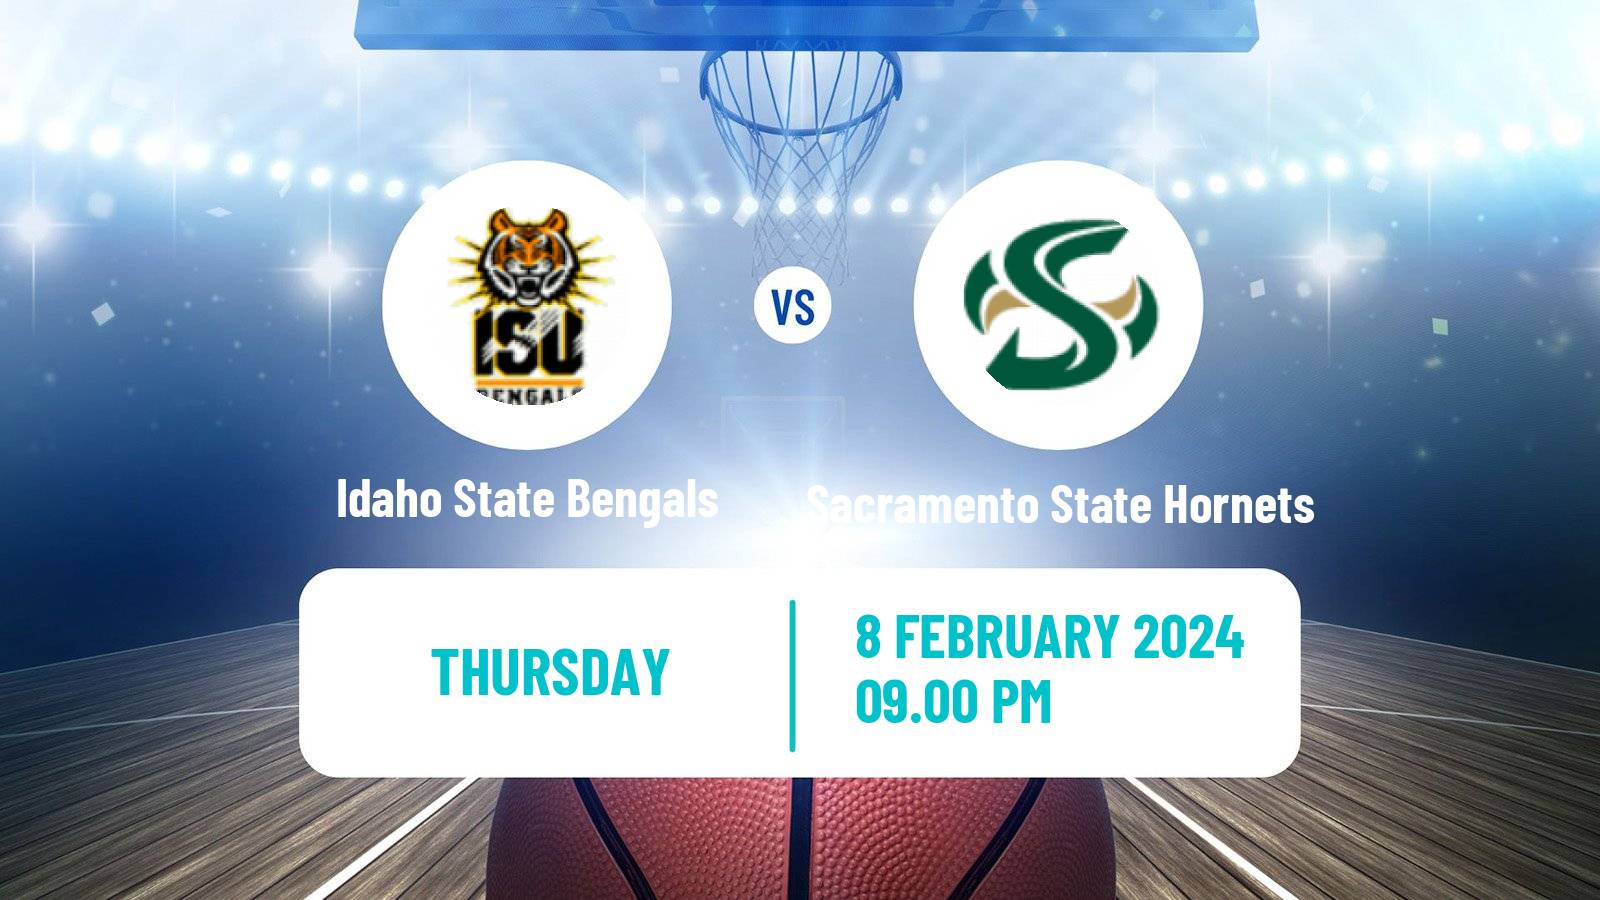 Basketball NCAA College Basketball Idaho State Bengals - Sacramento State Hornets